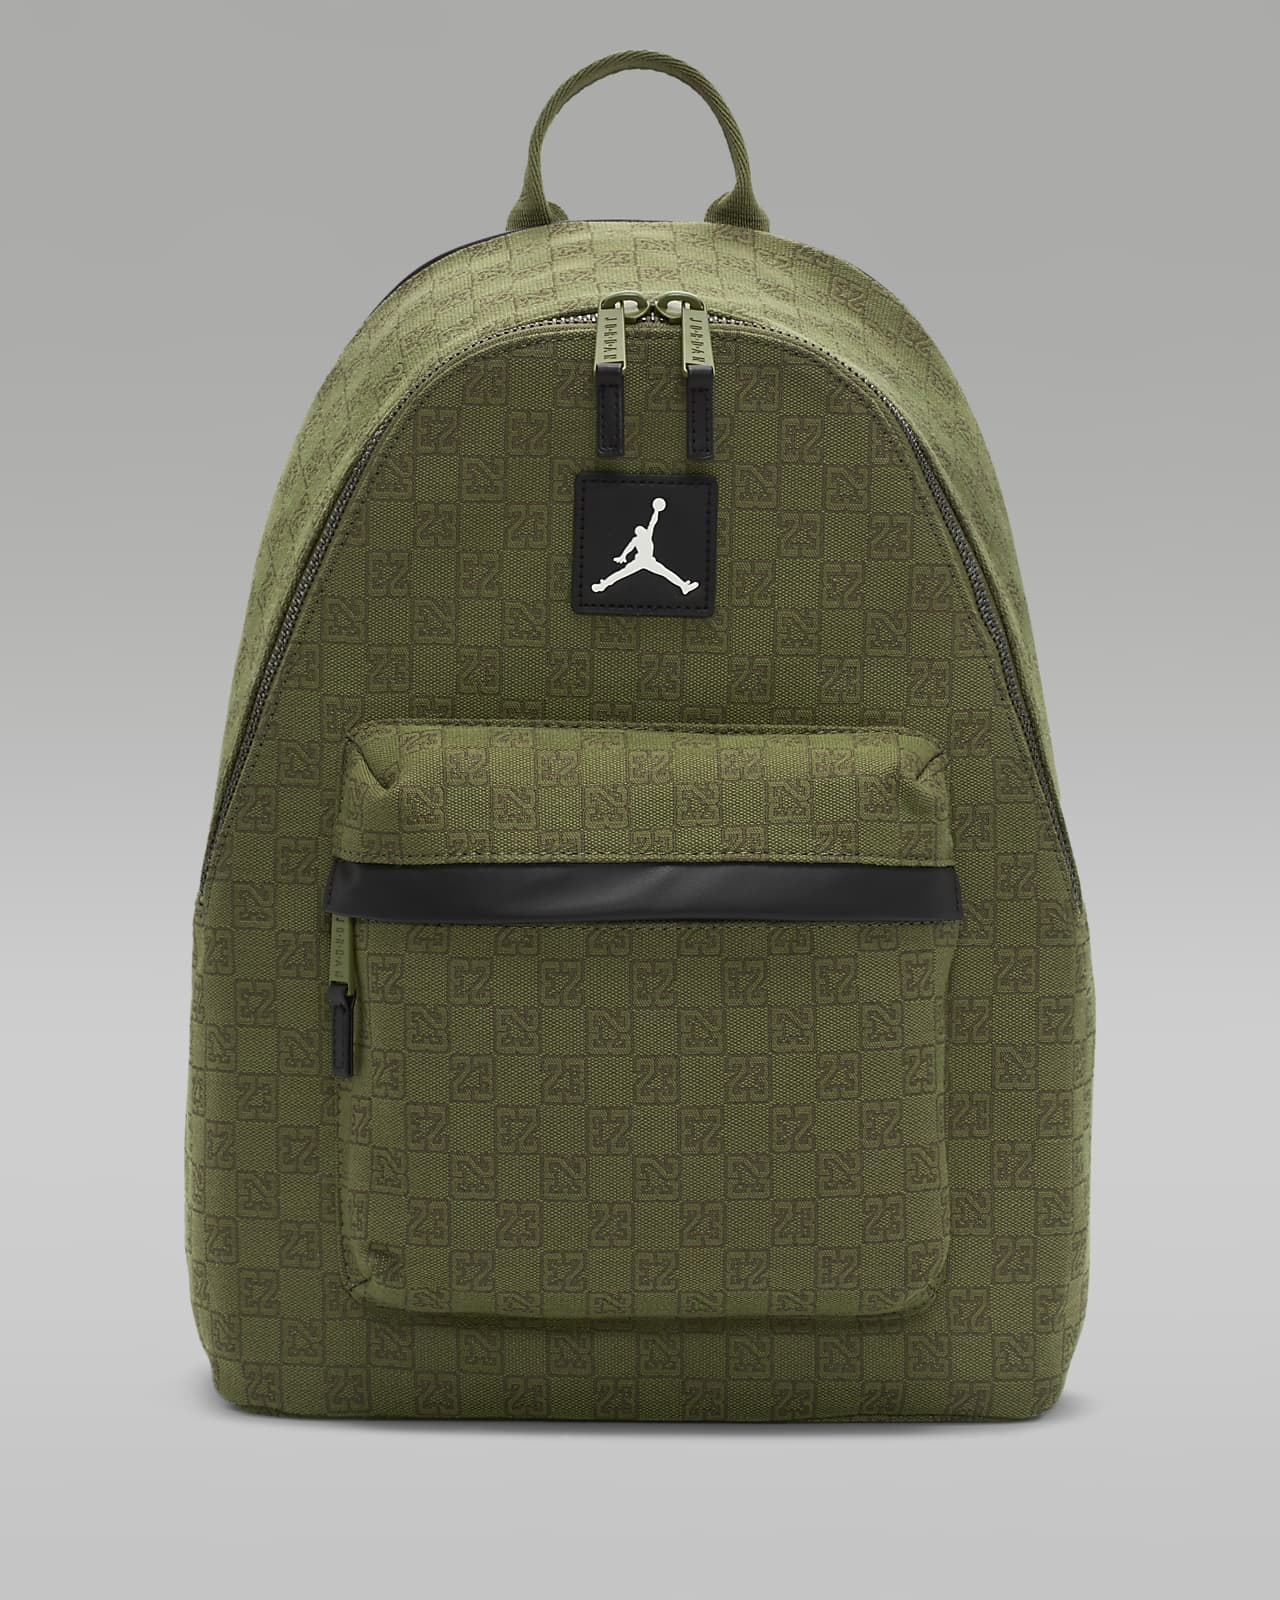 Jordan Monogram Backpack Backpack (20L)